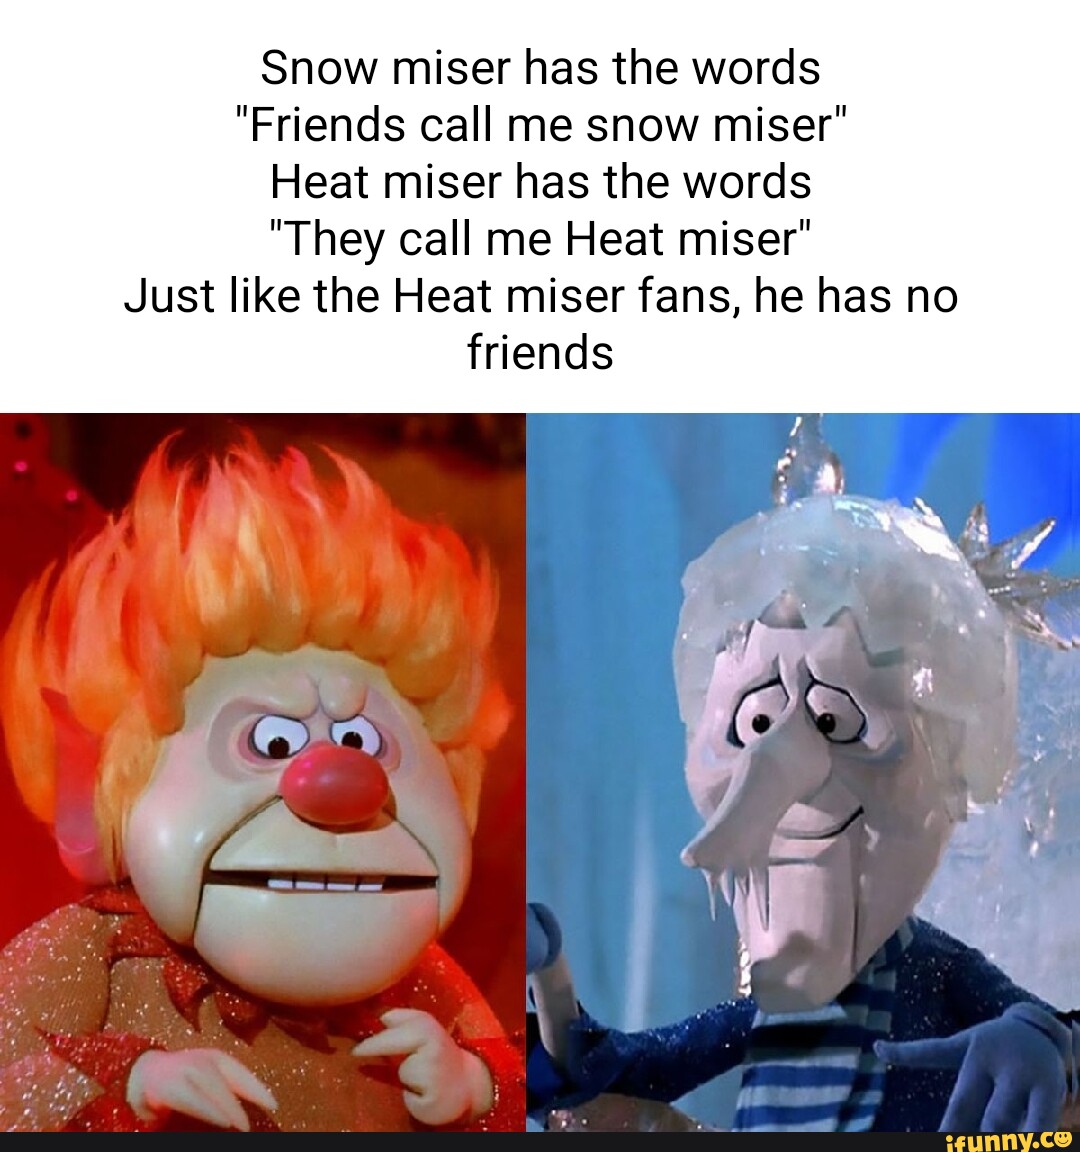 Cold miser lyrics